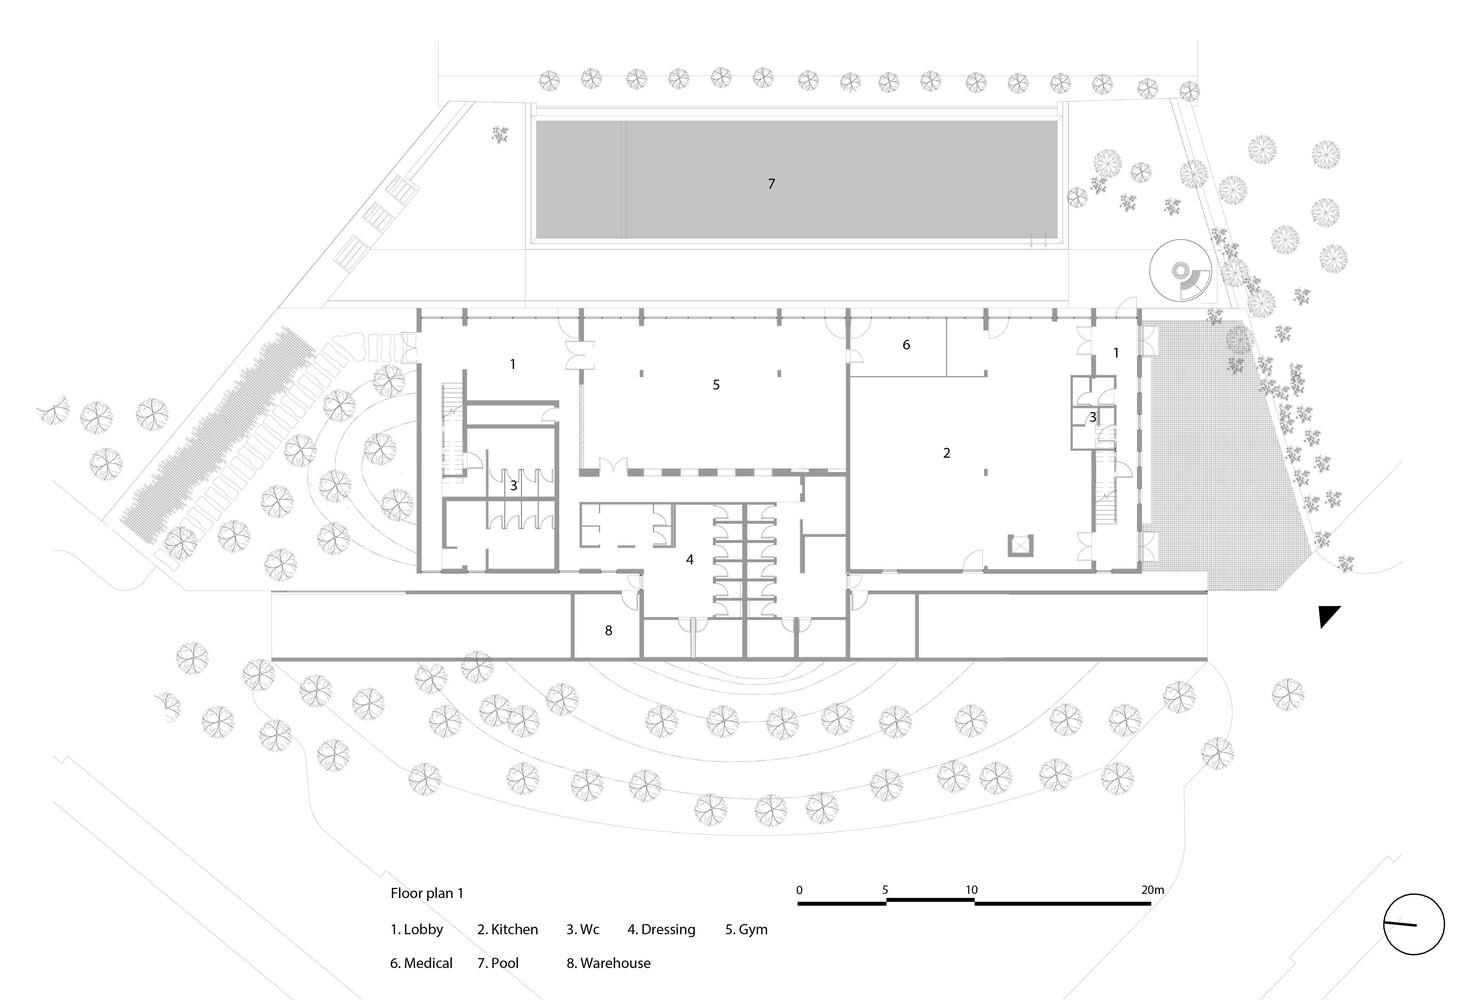 02-casamia-club-house-drawing-02-1st-floor-plan.jpg